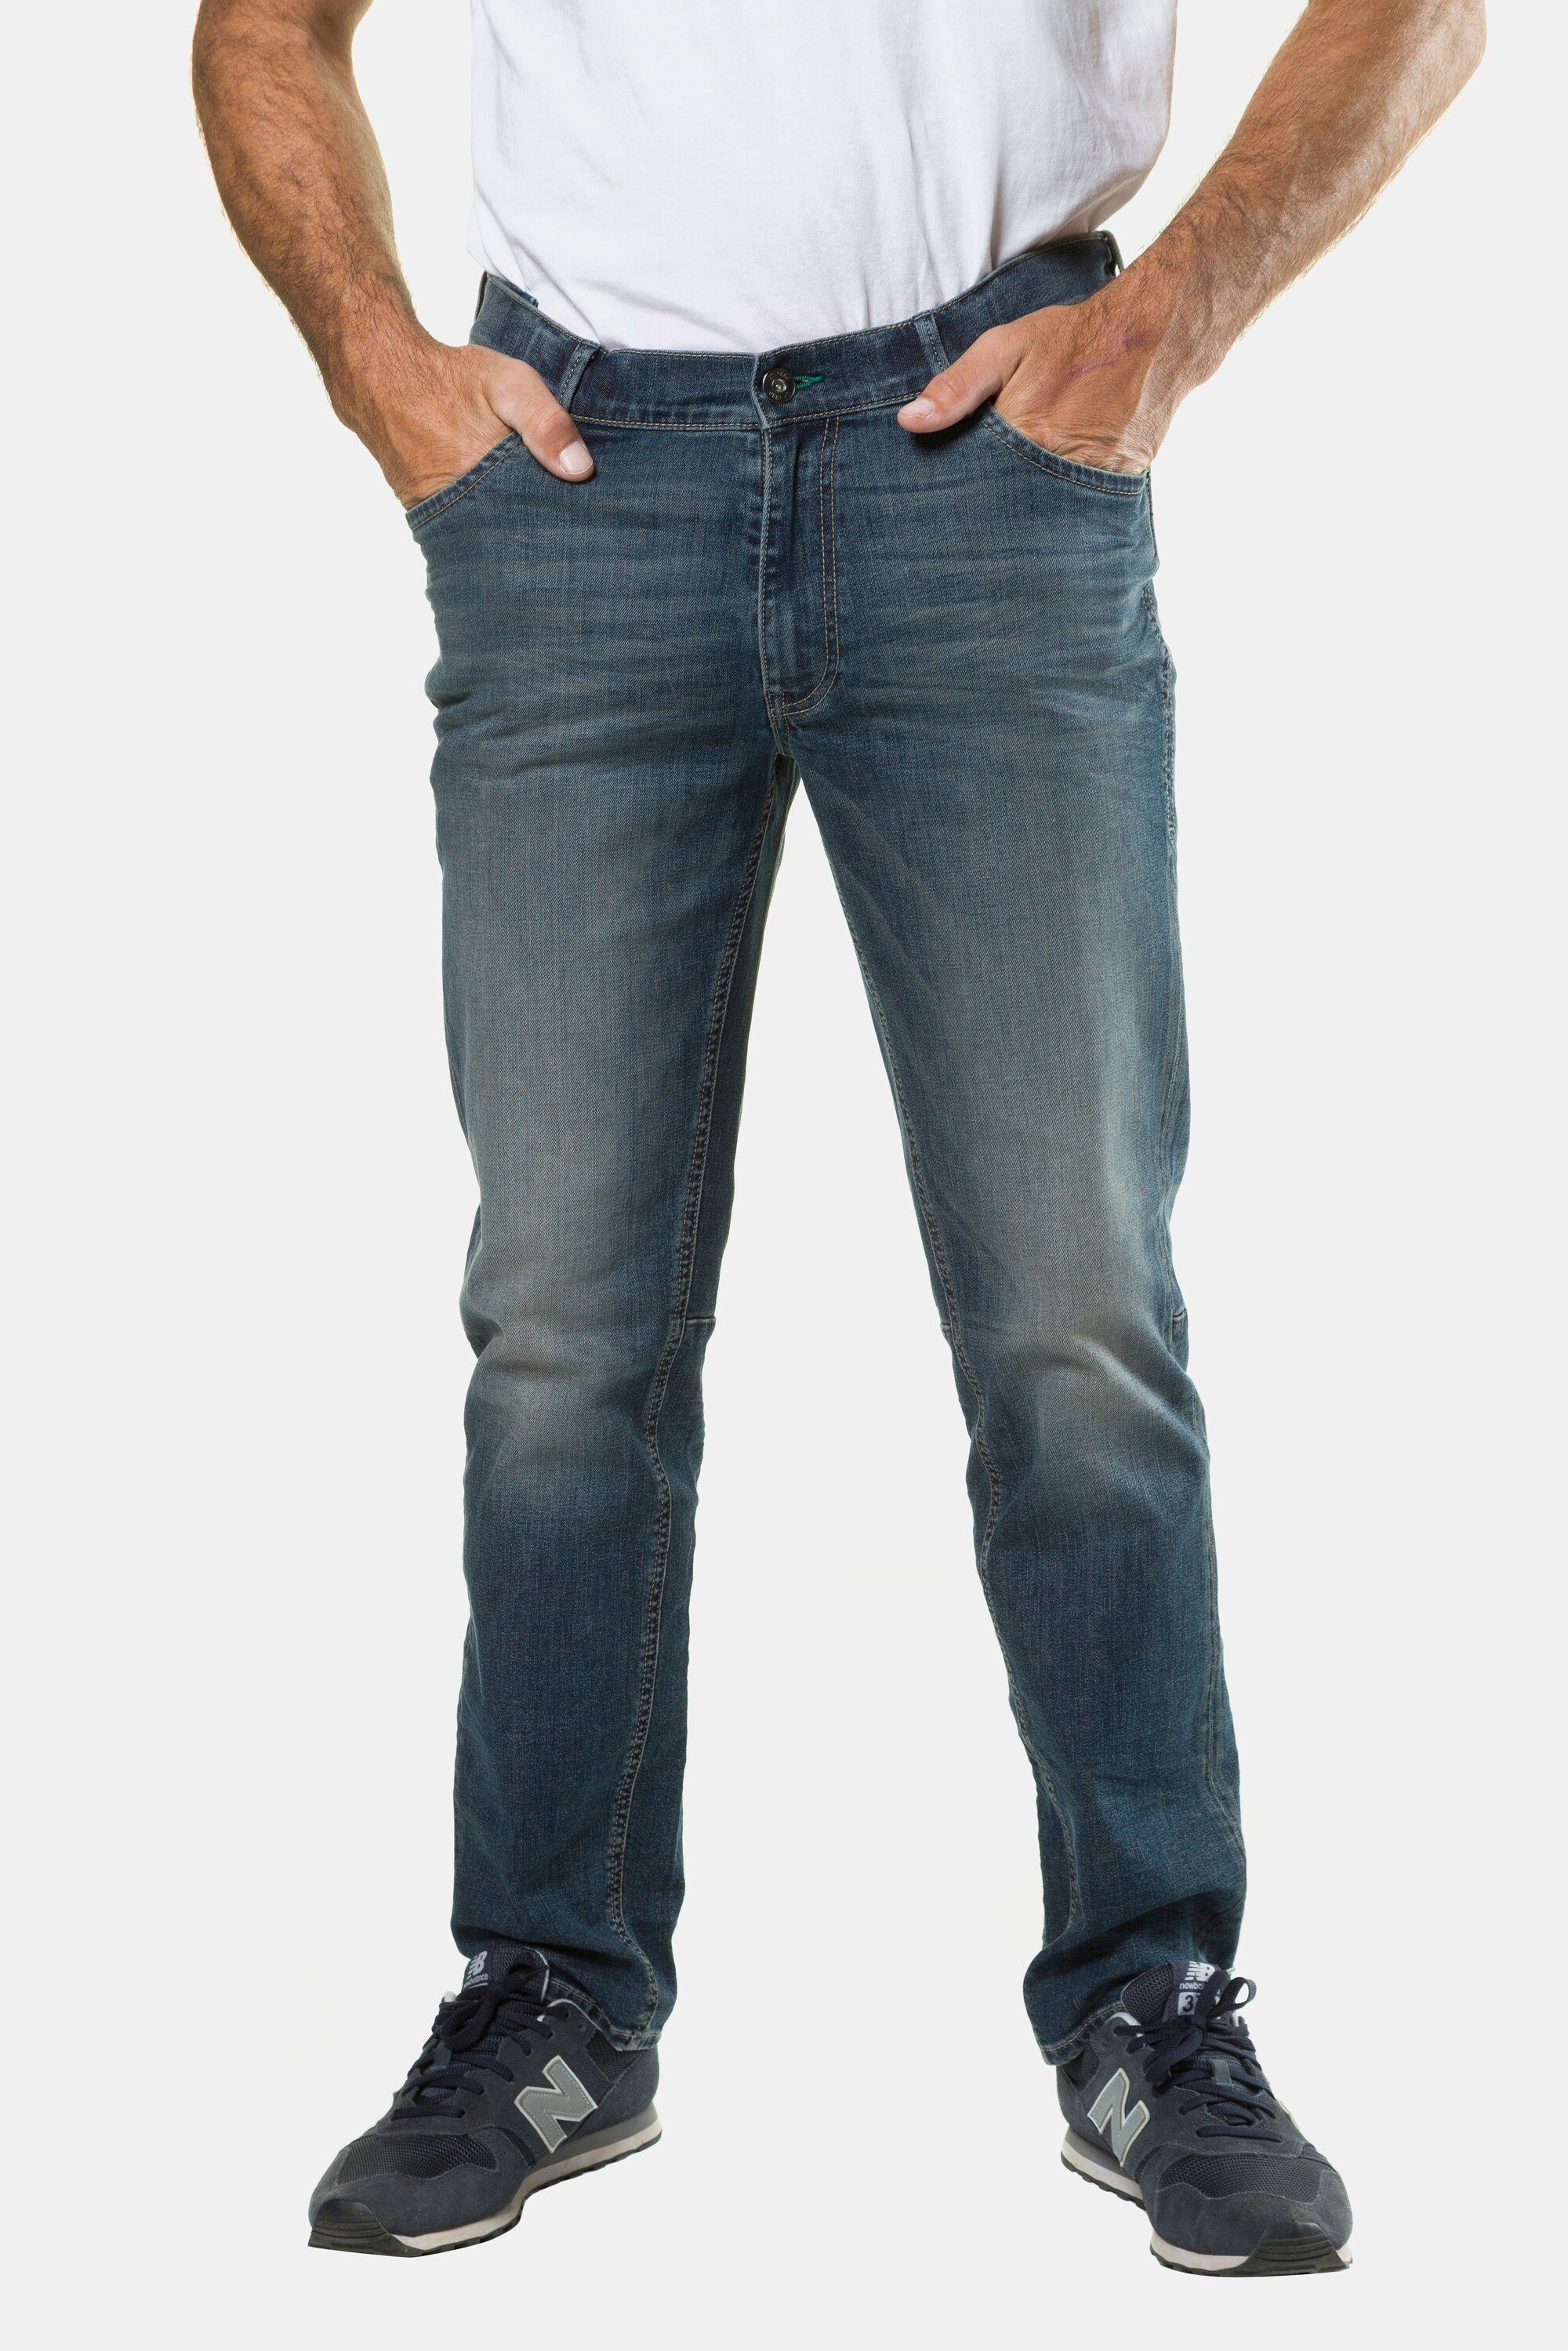 JP1880 Cargohose Traveller-Bund Denim Jeans Fit blue stone Straight